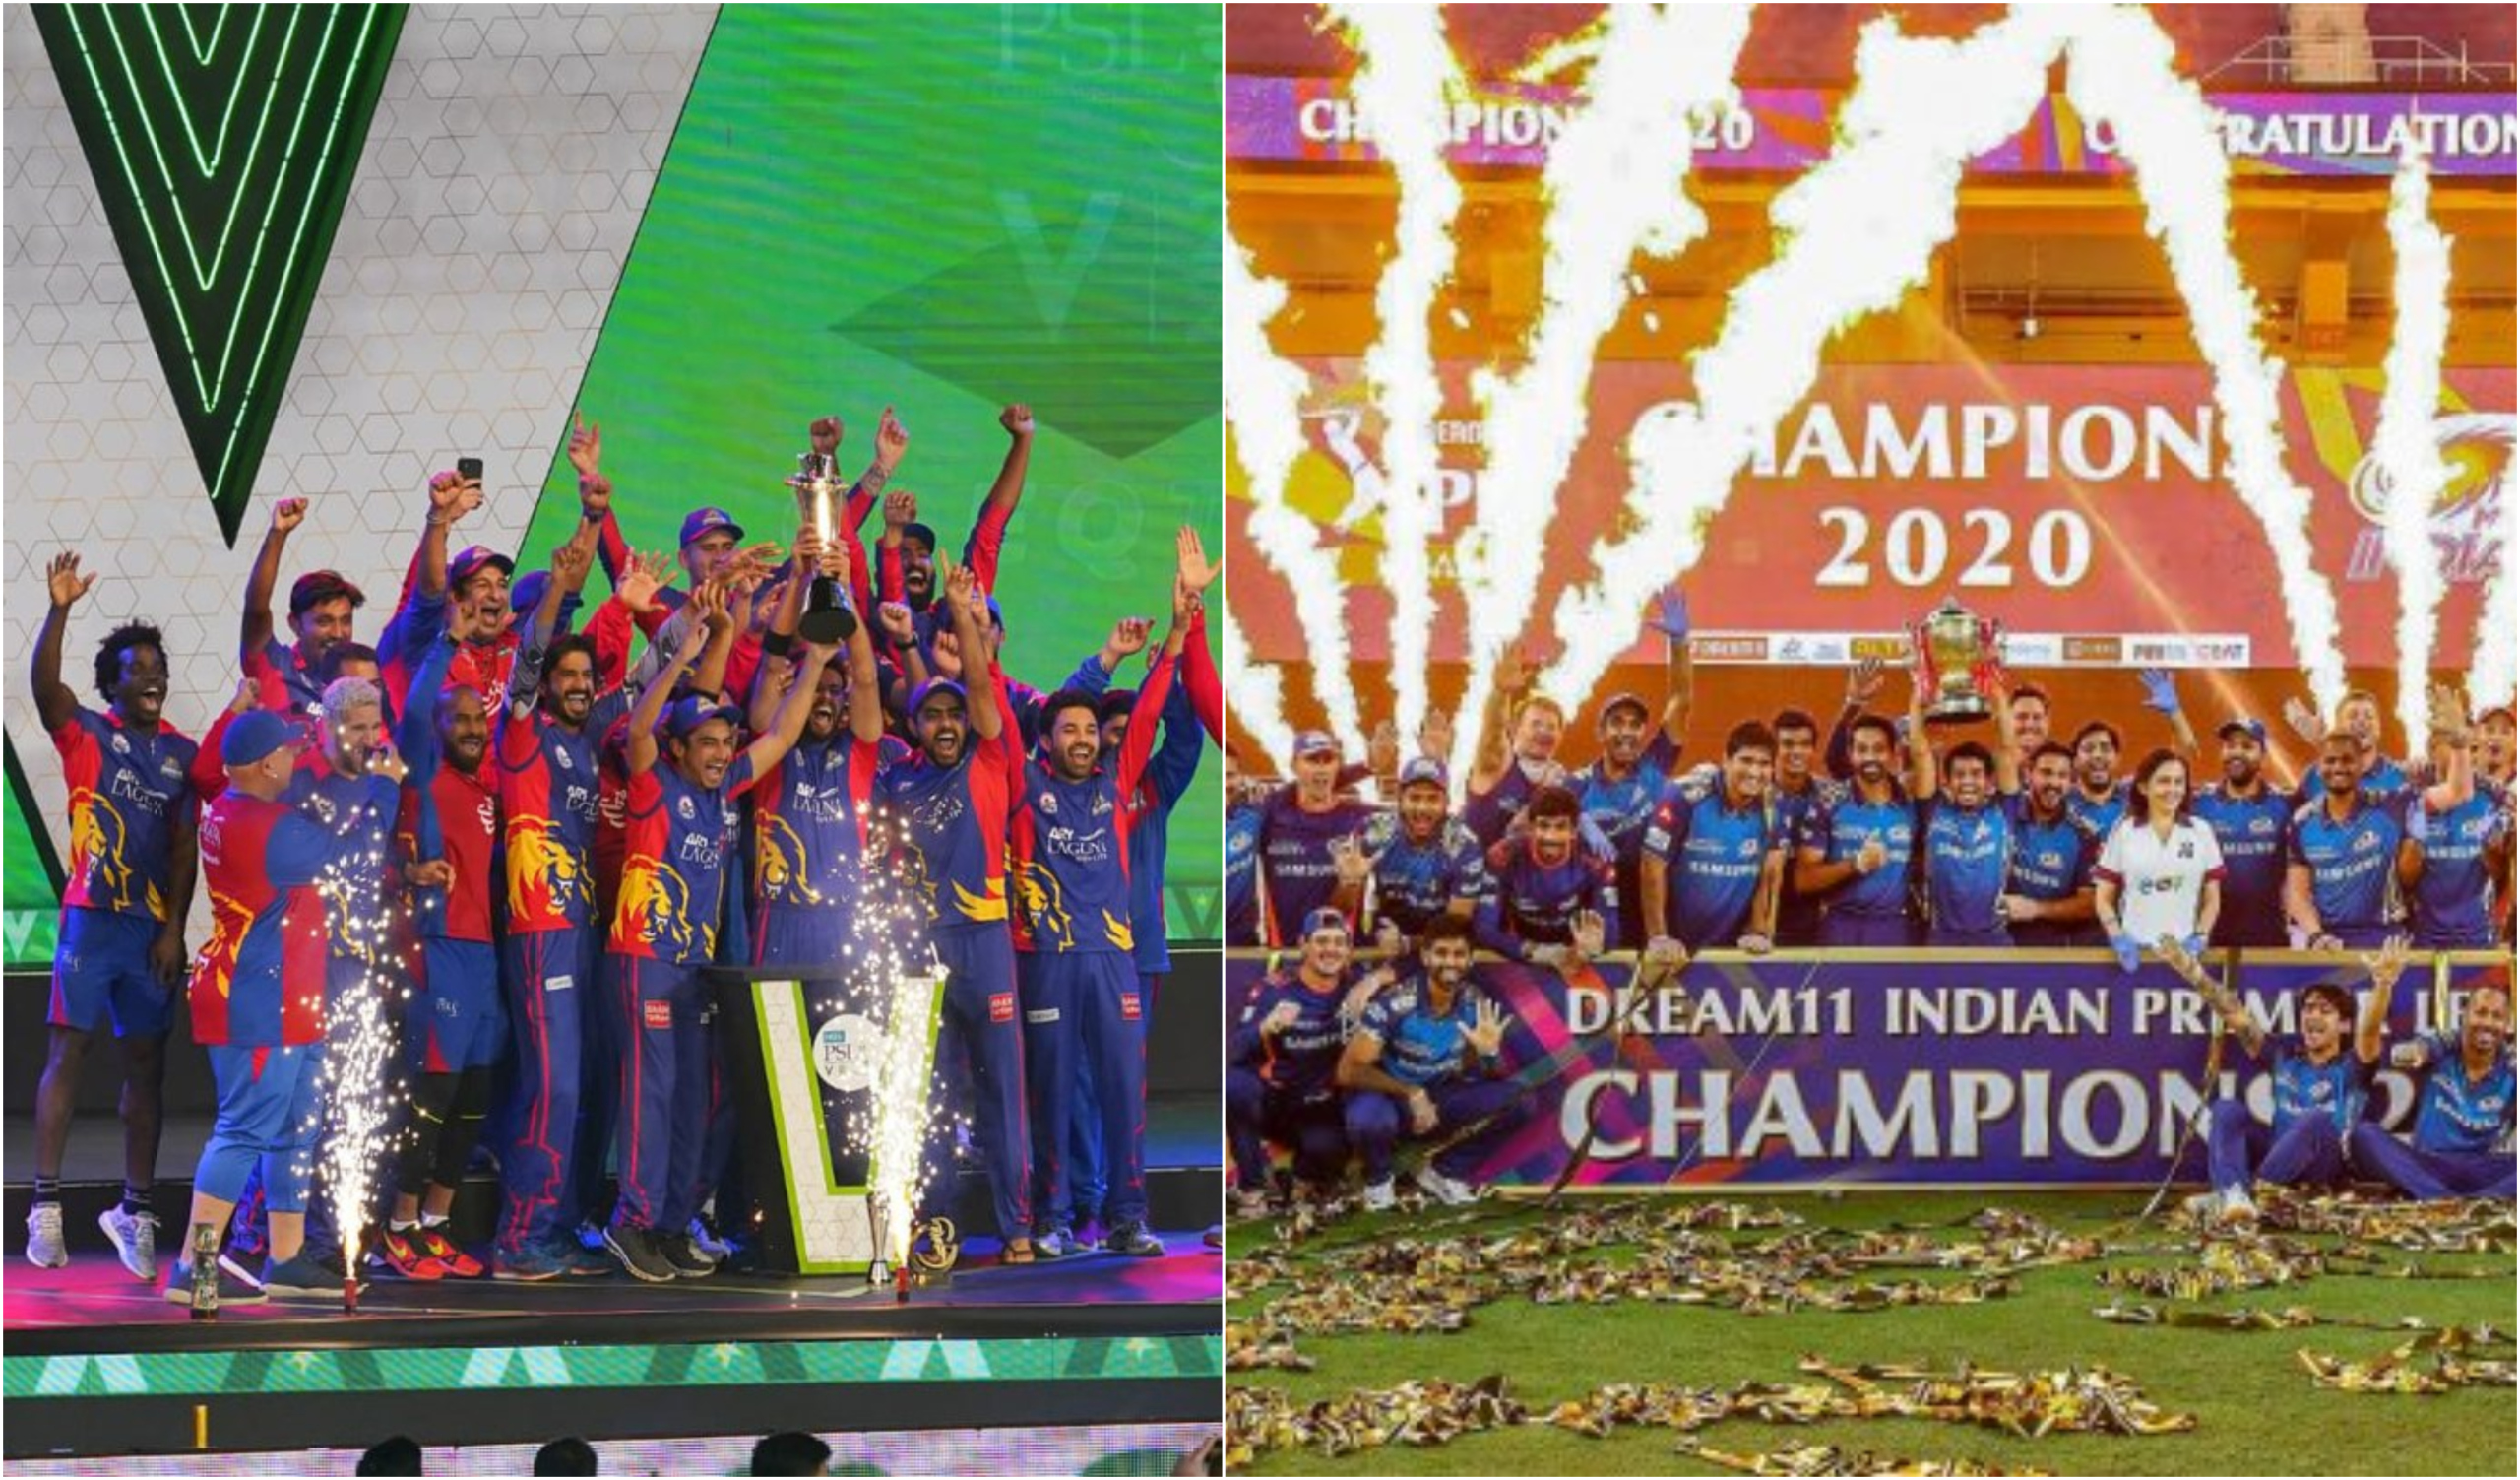 Surprising similarities between the final of IPL 2020 and PSL 2020